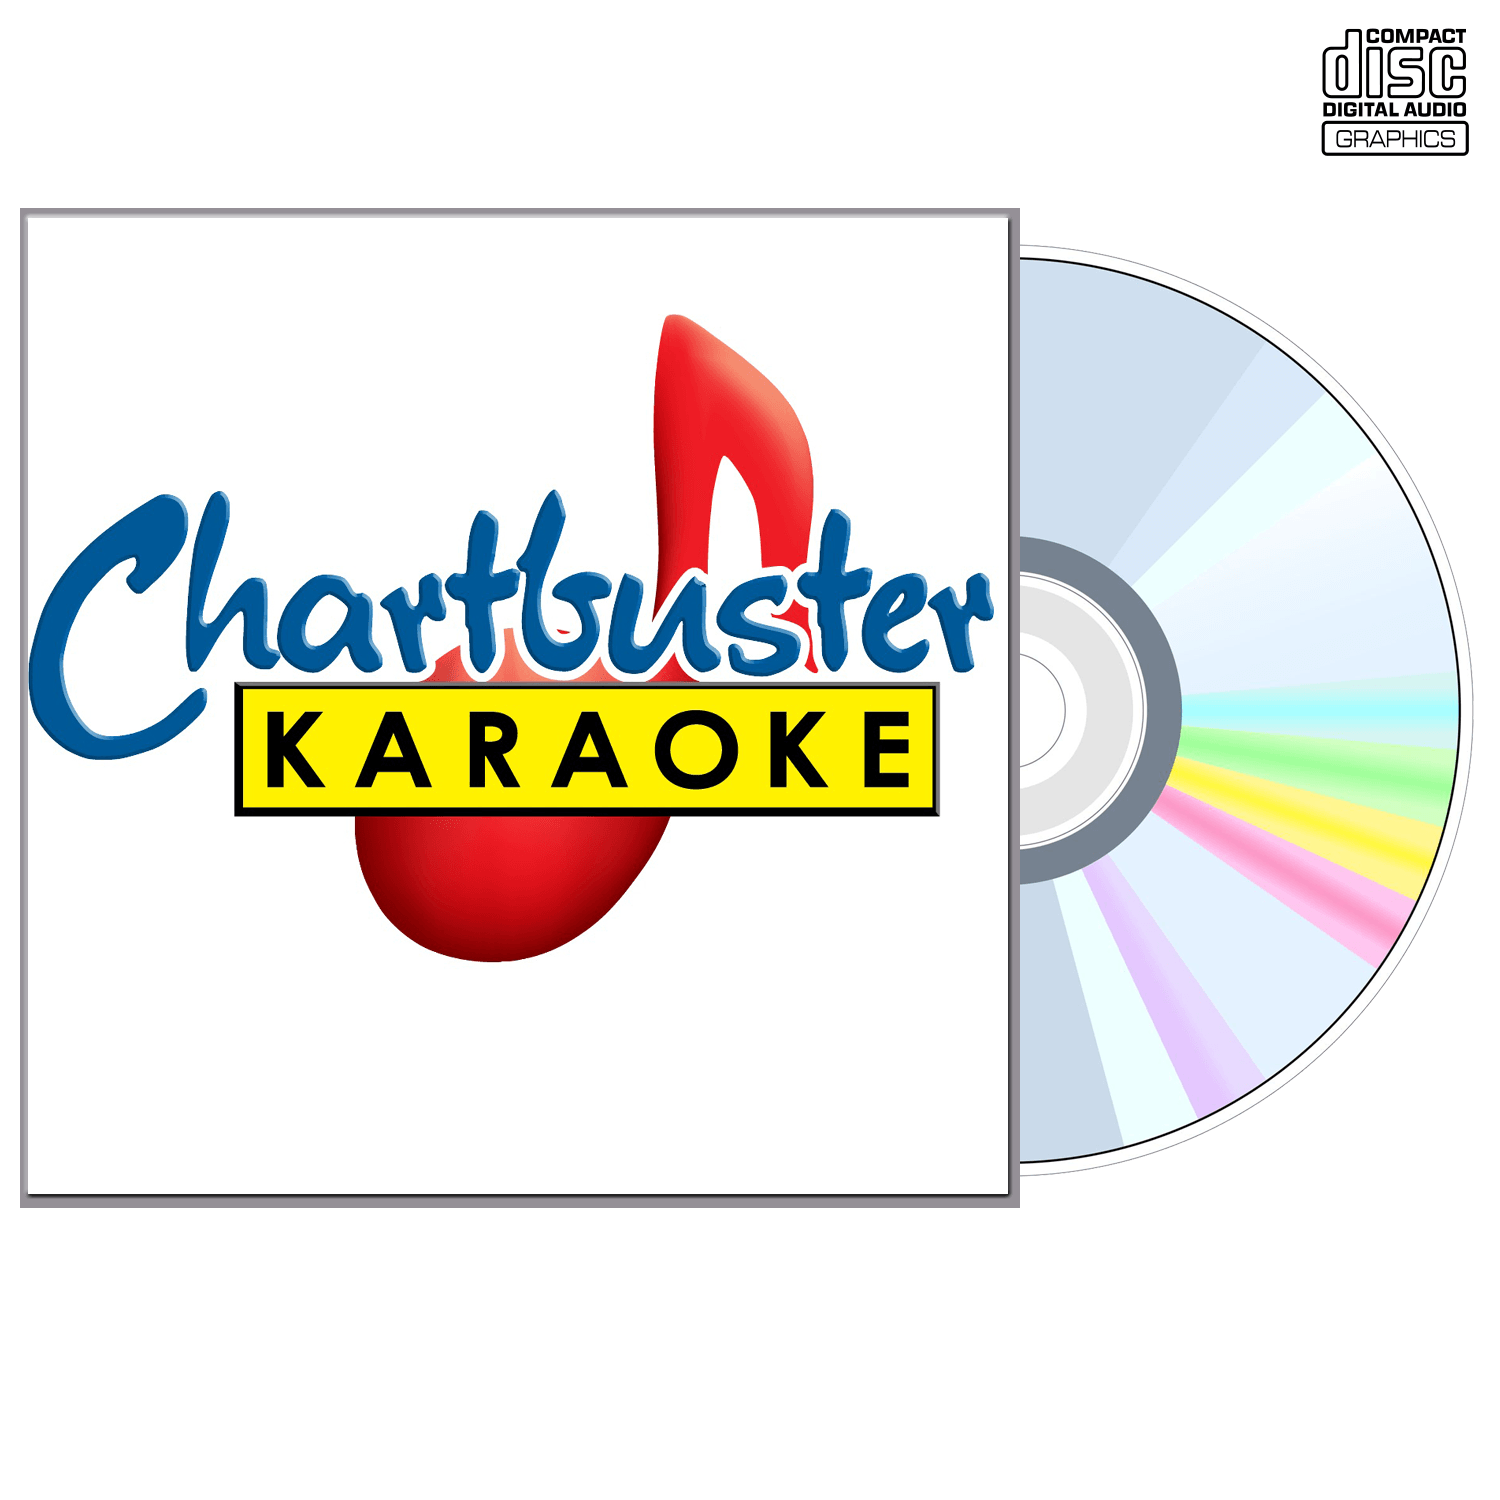 Isley Brothers - CD+G - Chartbuster Karaoke - Karaoke Home Entertainment